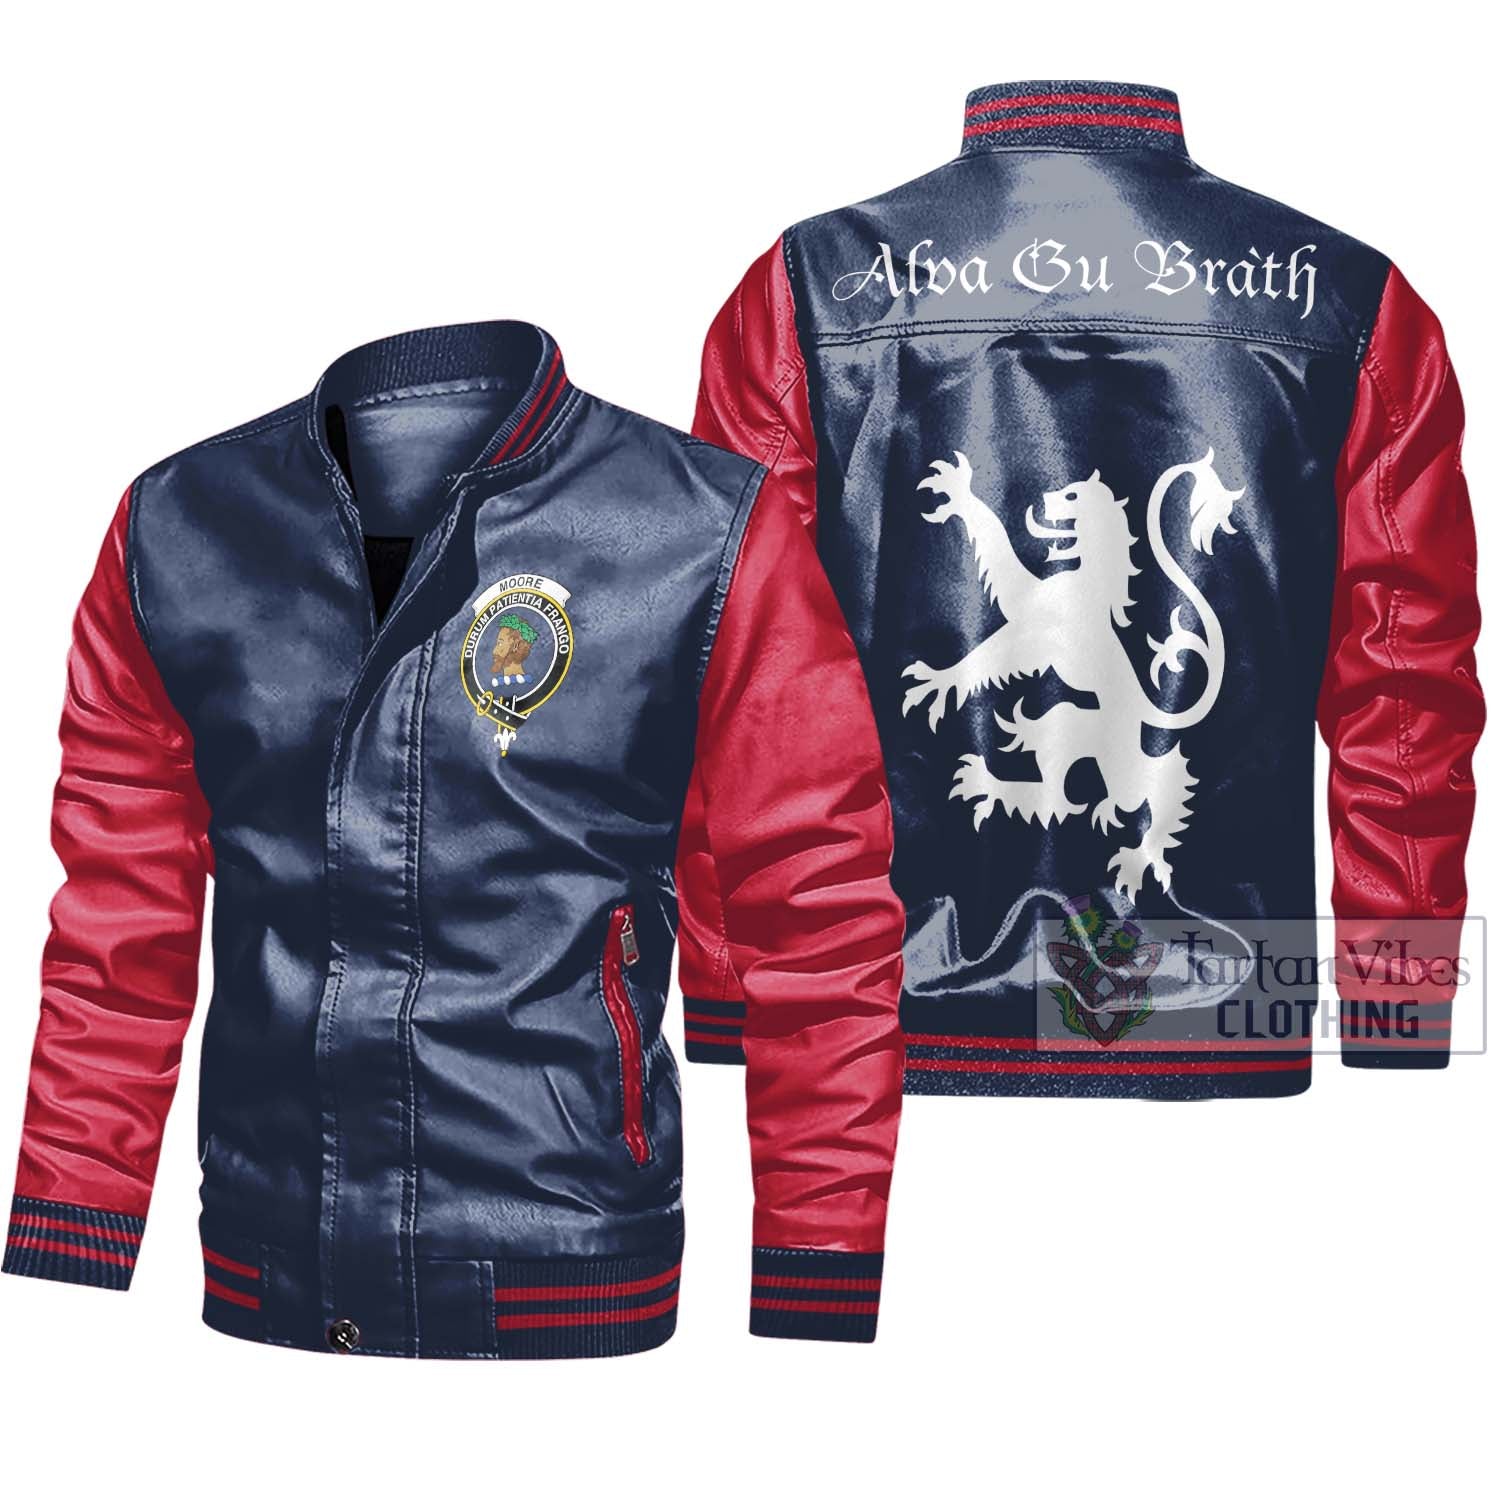 Tartan Vibes Clothing Moore Family Crest Leather Bomber Jacket Lion Rampant Alba Gu Brath Style